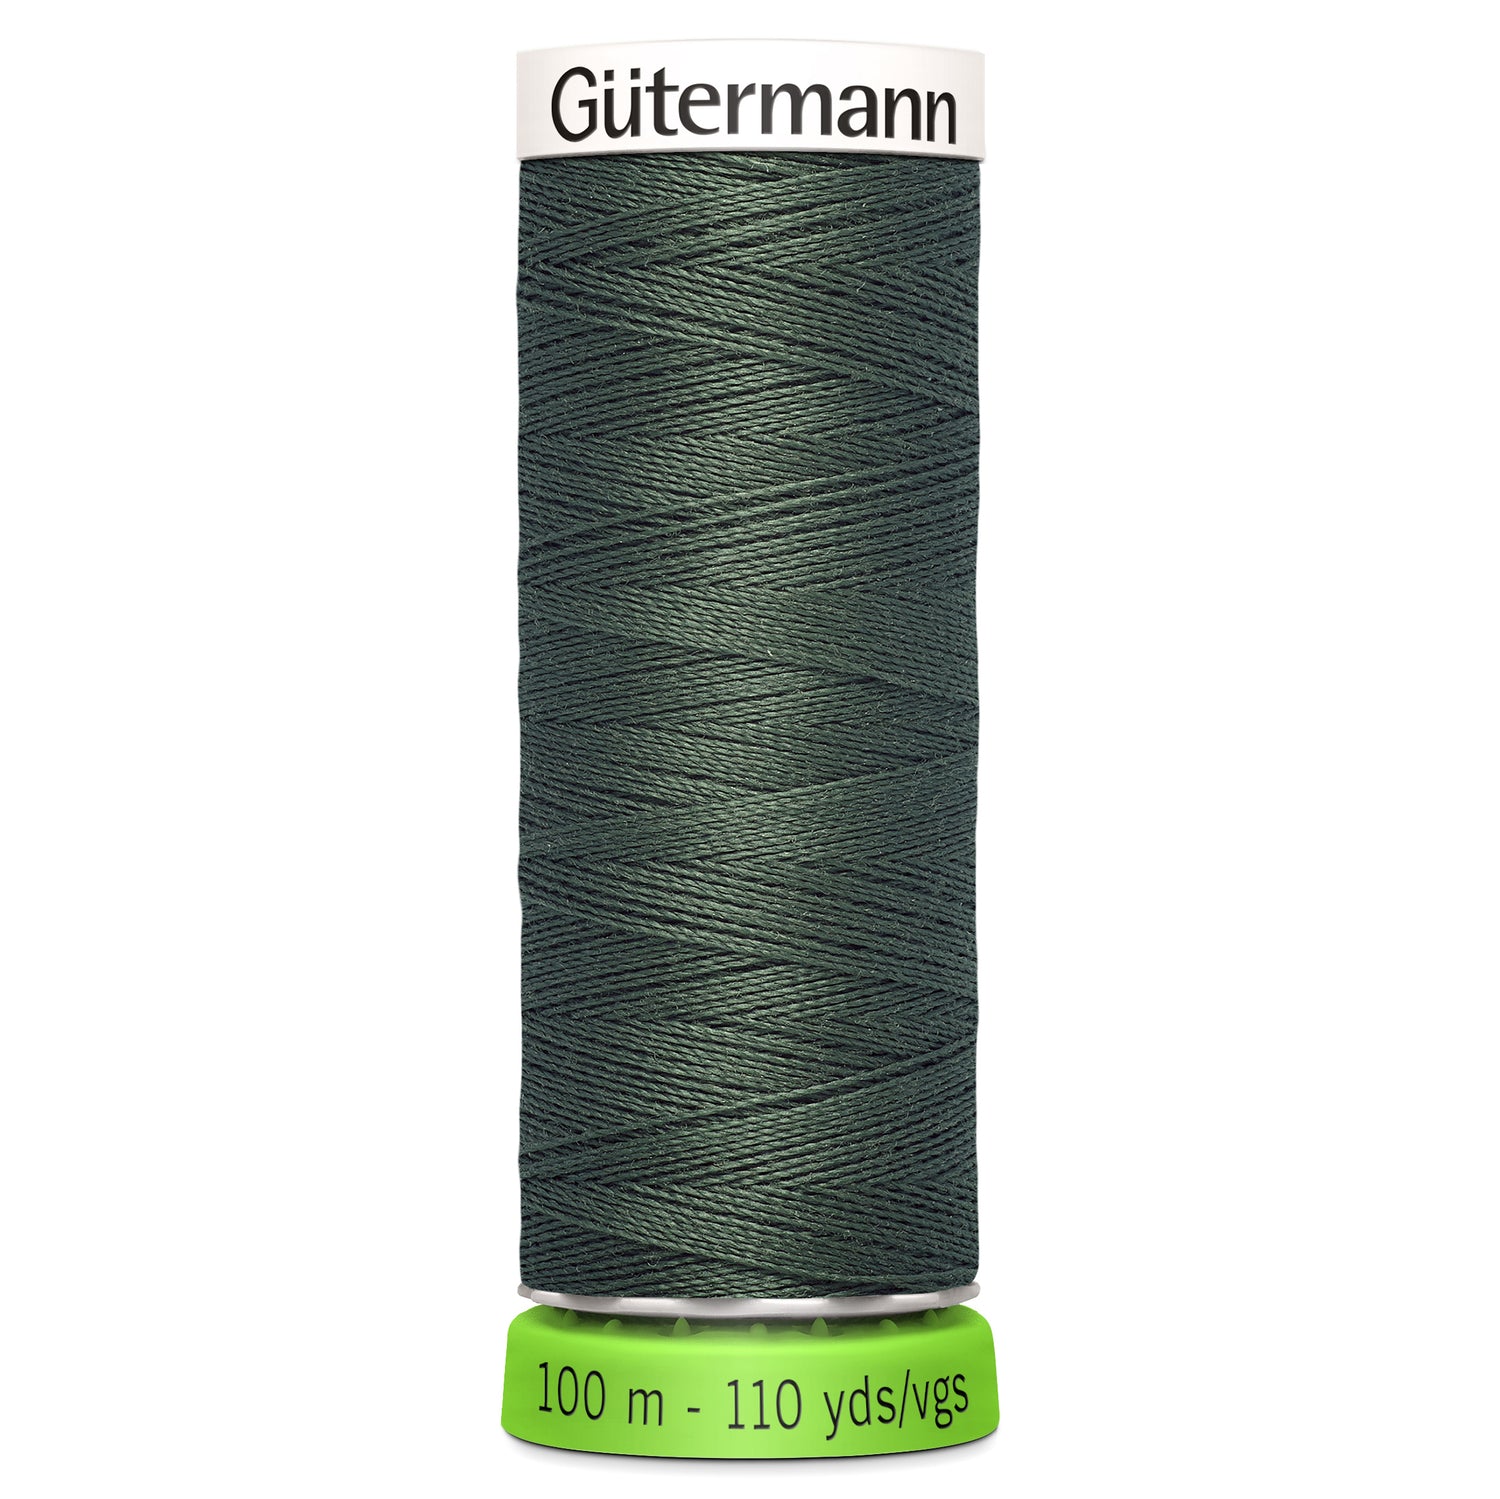 269 Garden Trellis - Gütermann Sew All rPET Thread 100m